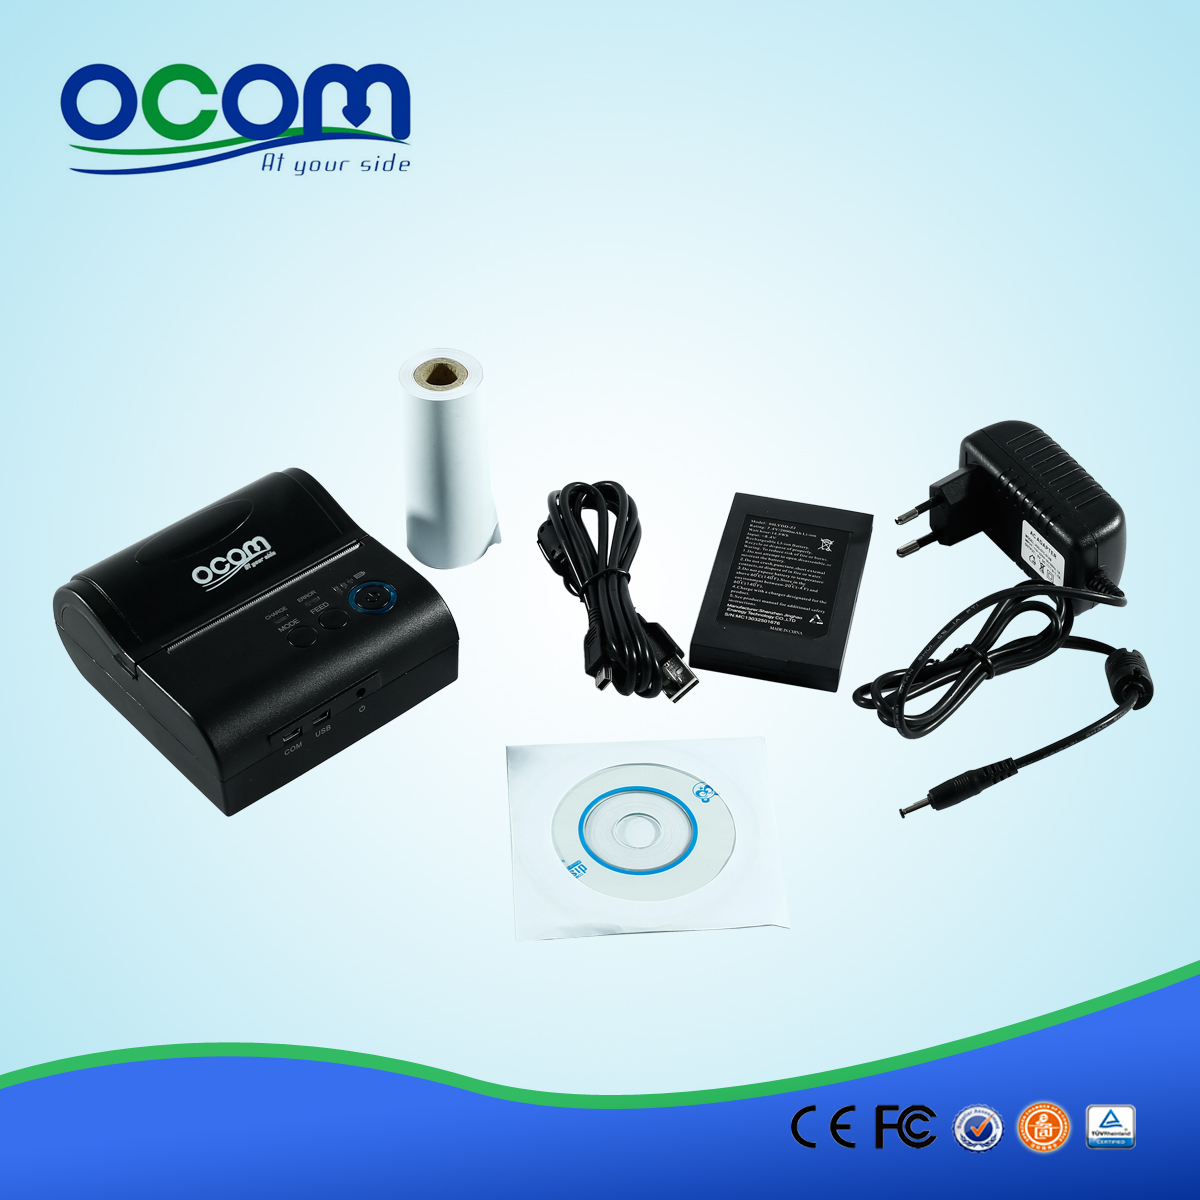 OCPP-M082: 80MM stampante Bluetooth Supporto Android, Windows, Linux, con SDK